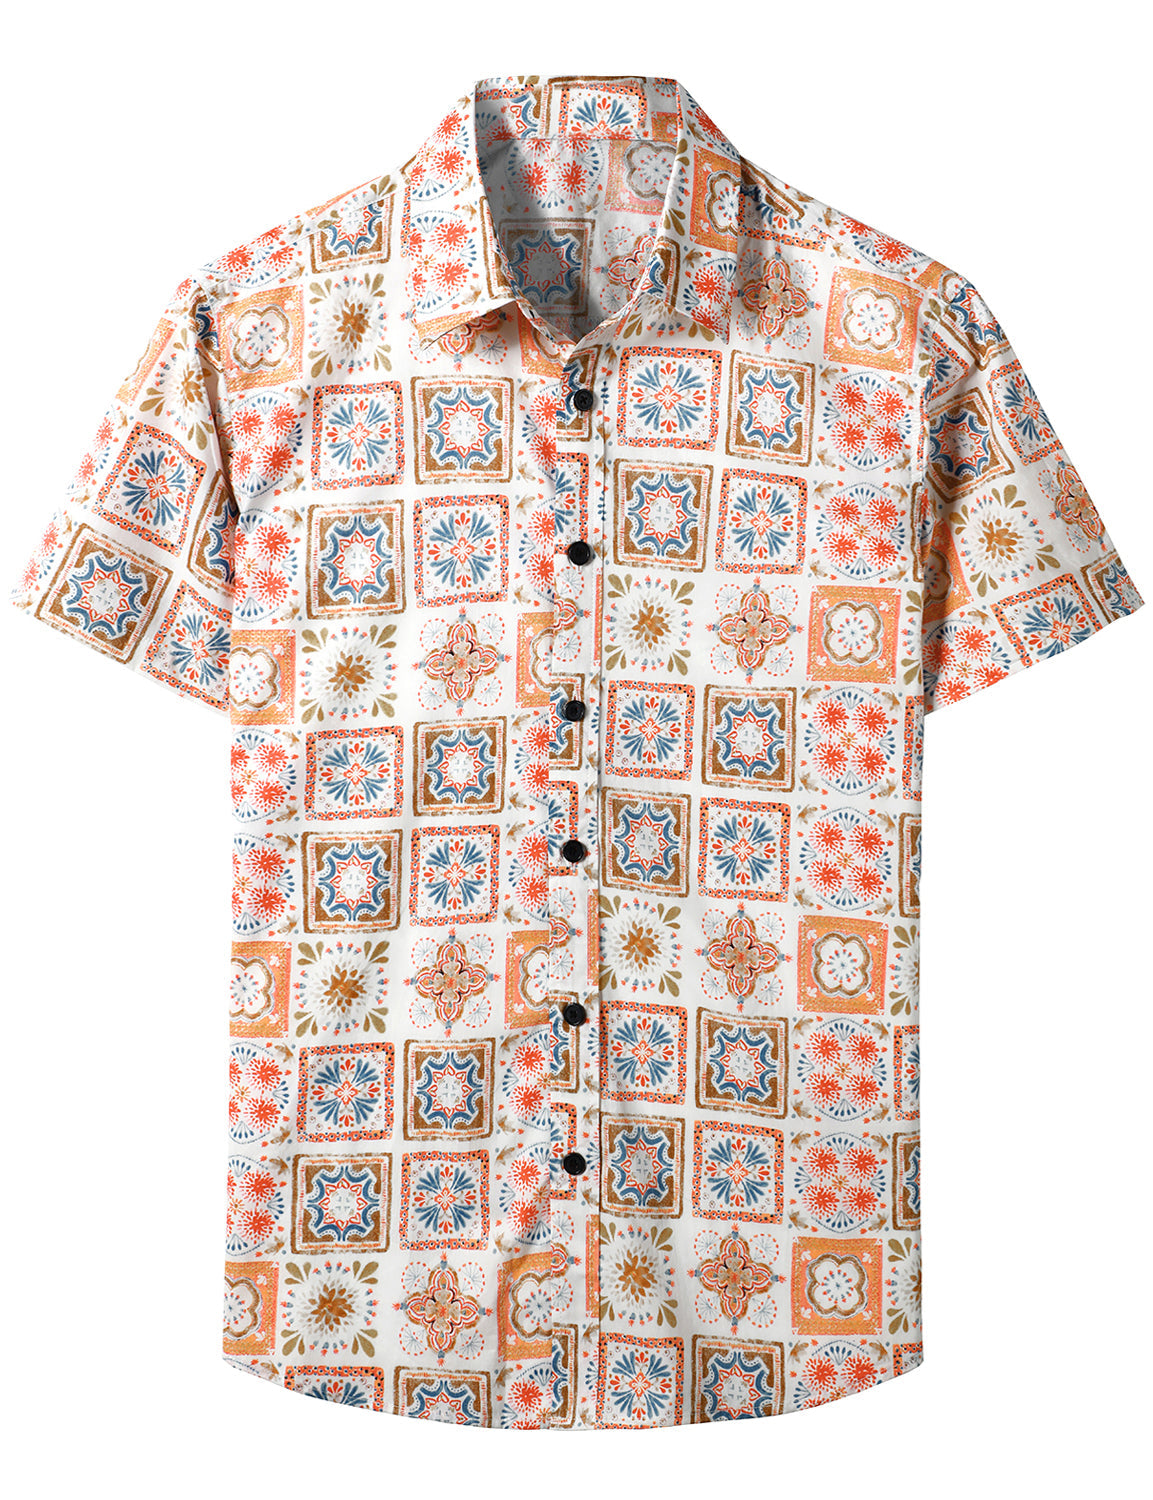 Men's Vintage Patchwork Floral Beige Breathable Boho Cotton Bohemian Short Sleeve Shirt